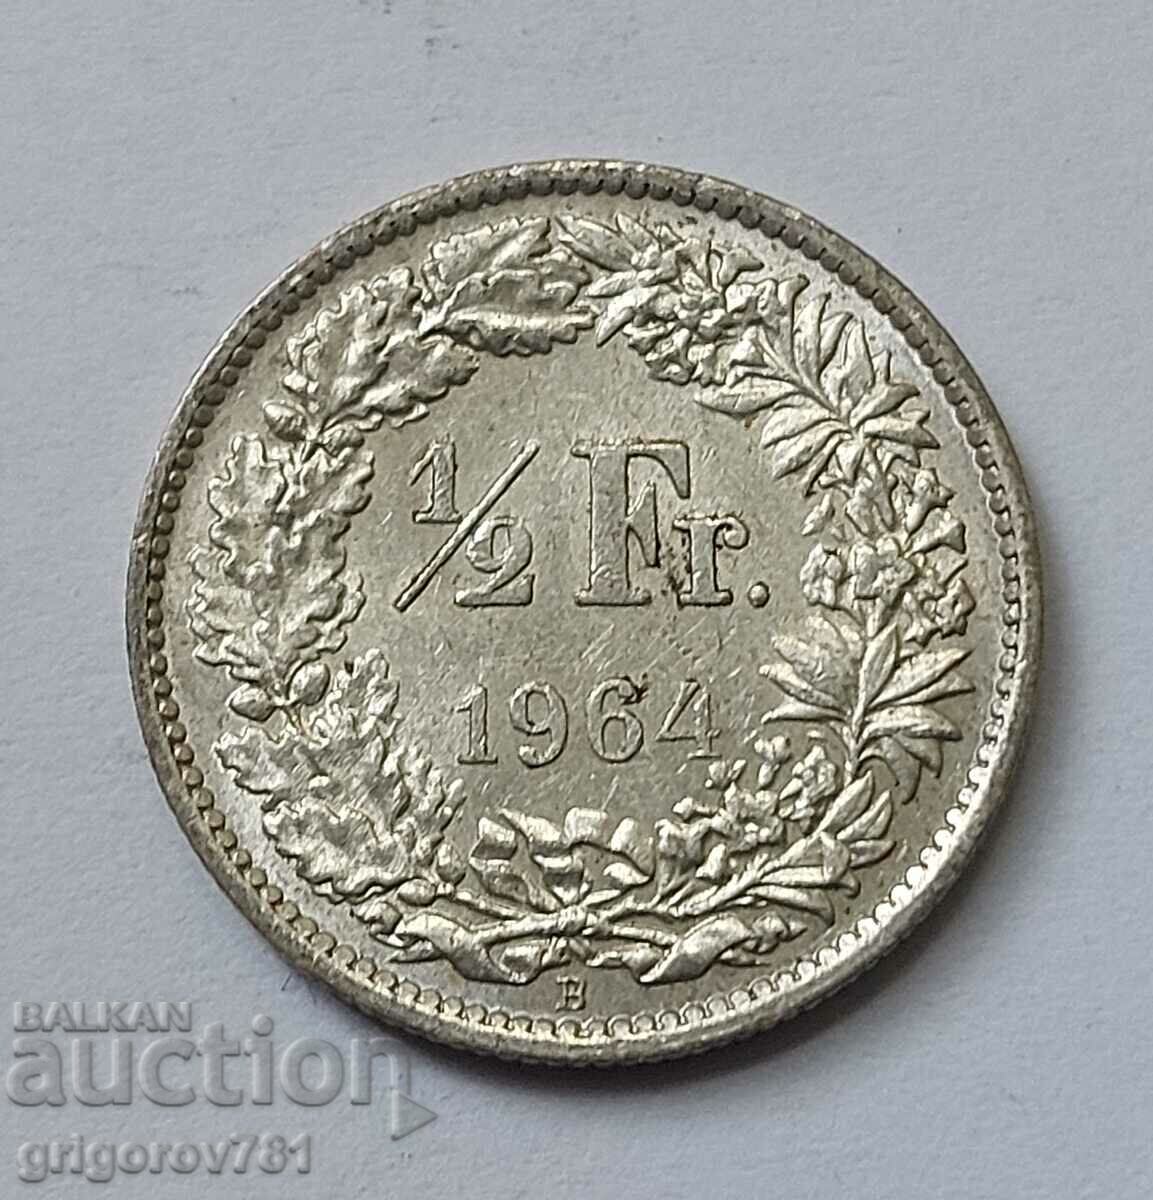 1/2 Franc Silver Switzerland 1964 B - Silver Coin #164